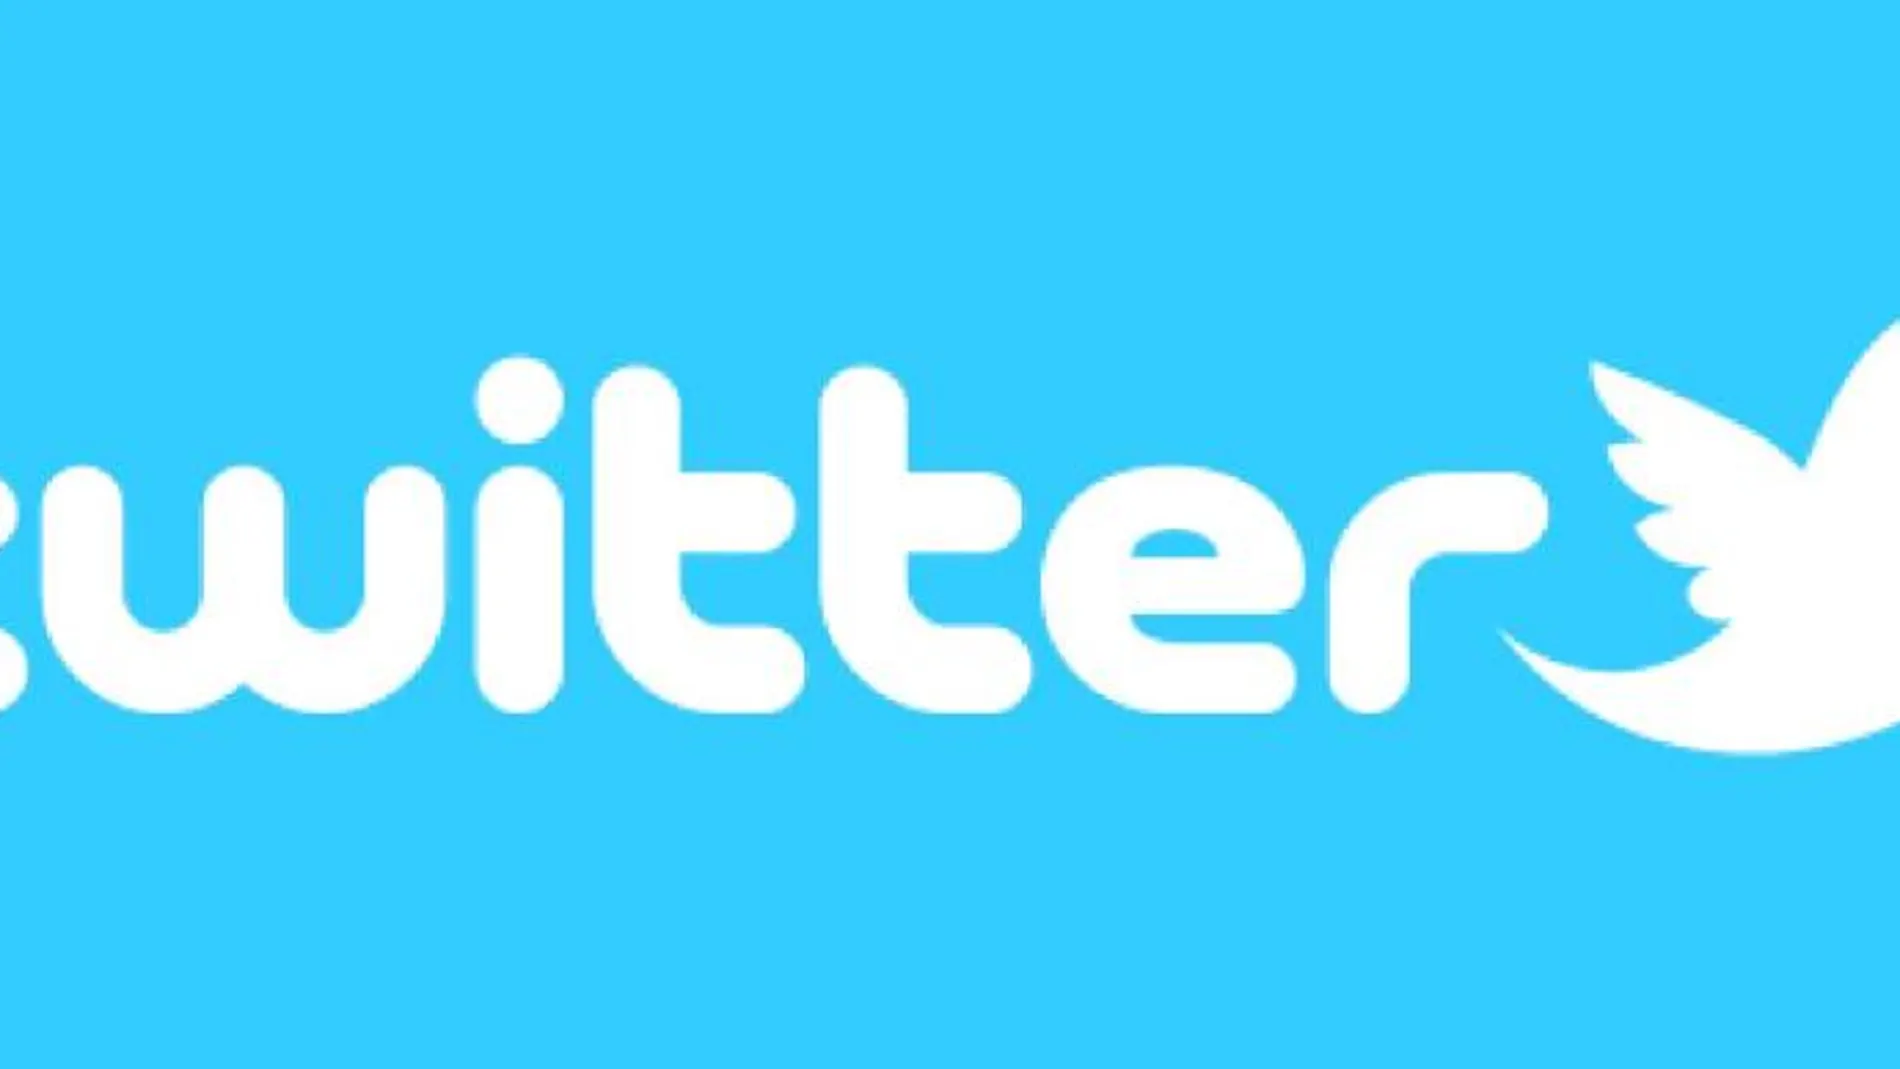 Twitter permite comentar «tuits» en 116 caracteres